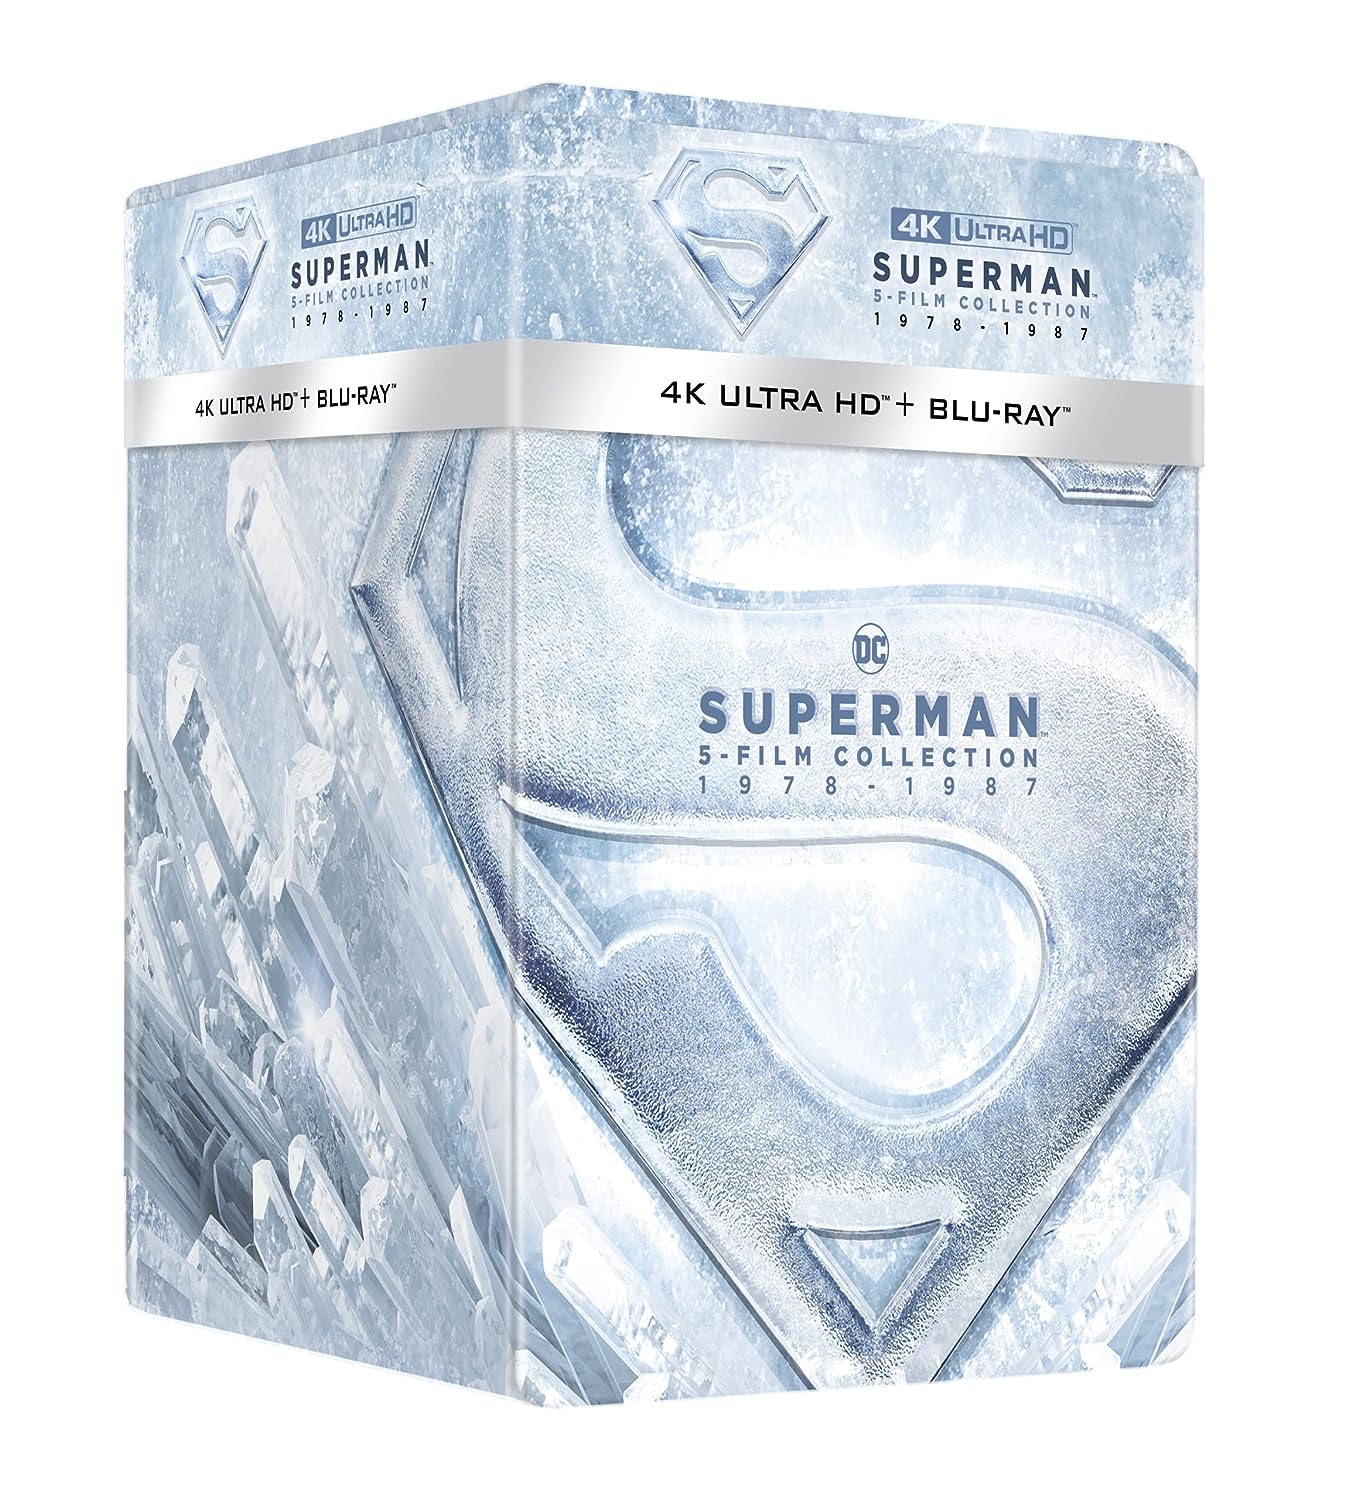 Супермен I-IV (англ. язык) (4K UHD + Blu-ray) Steelbook Collection